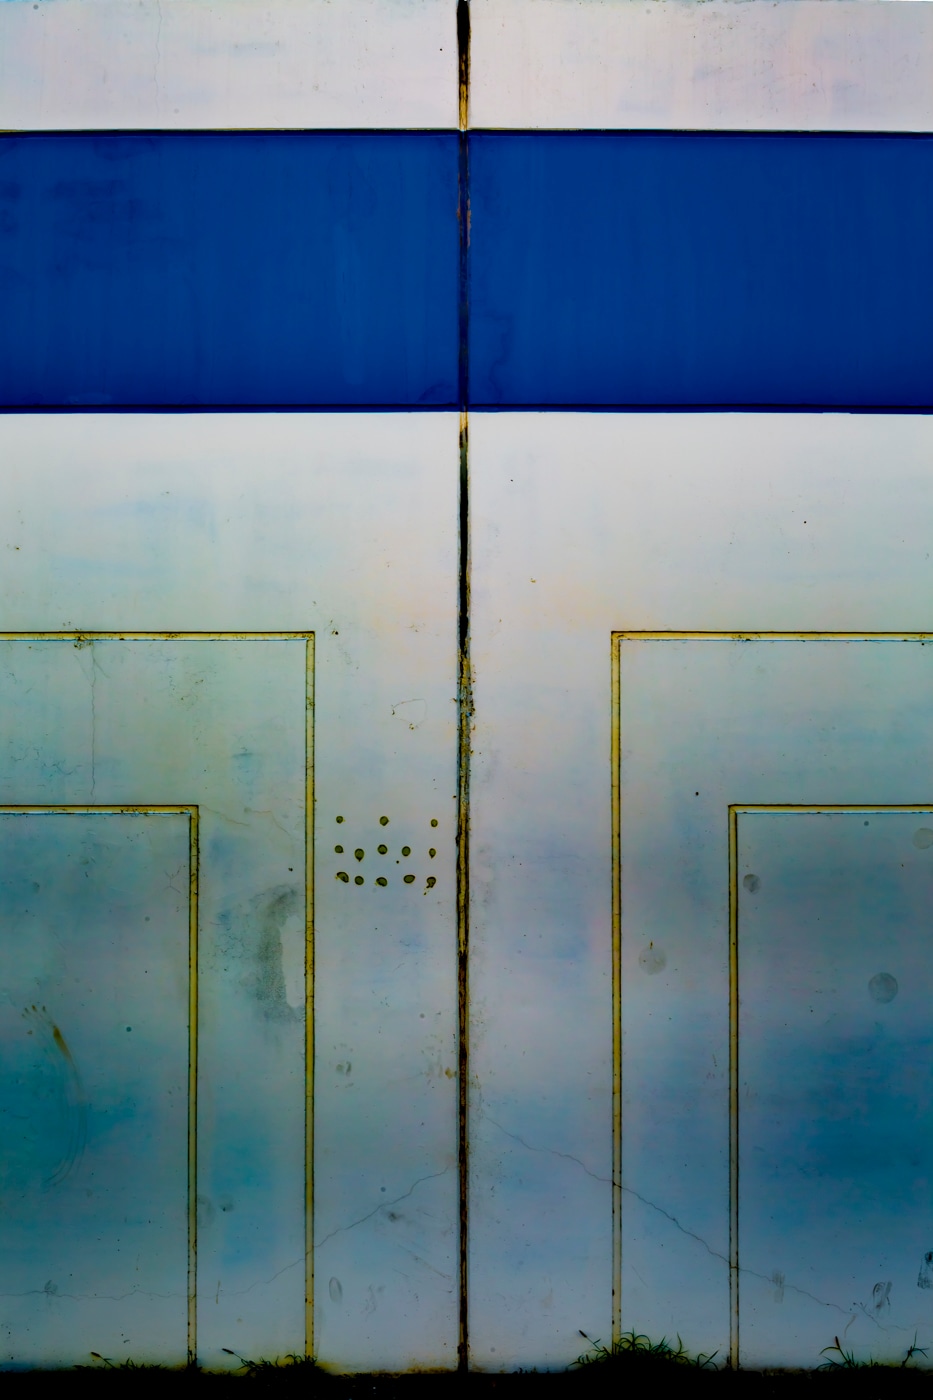 Geometric abstract photograph by Thomas Watkins